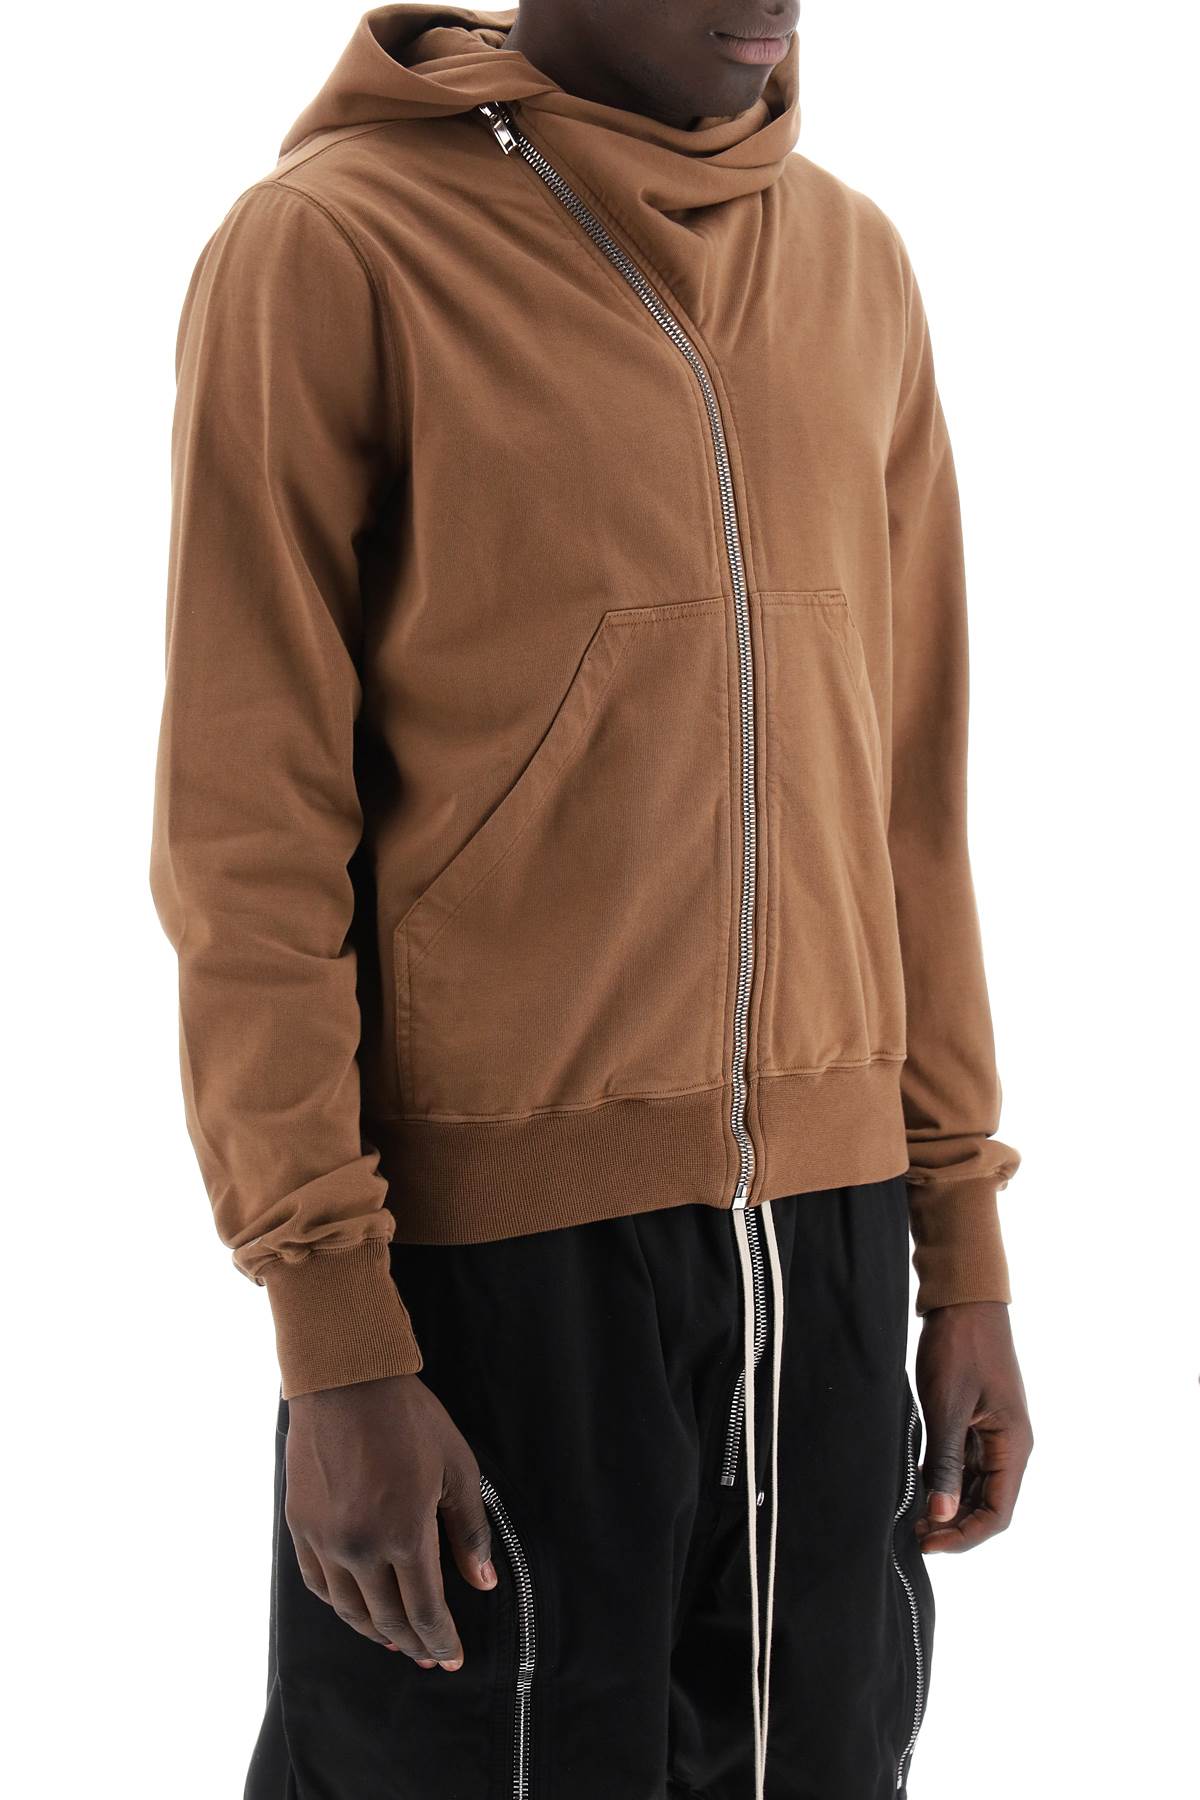 DRKSHDW Men's Asymmetrical Hooded Sweatshirt with Curved Zipper - Brown